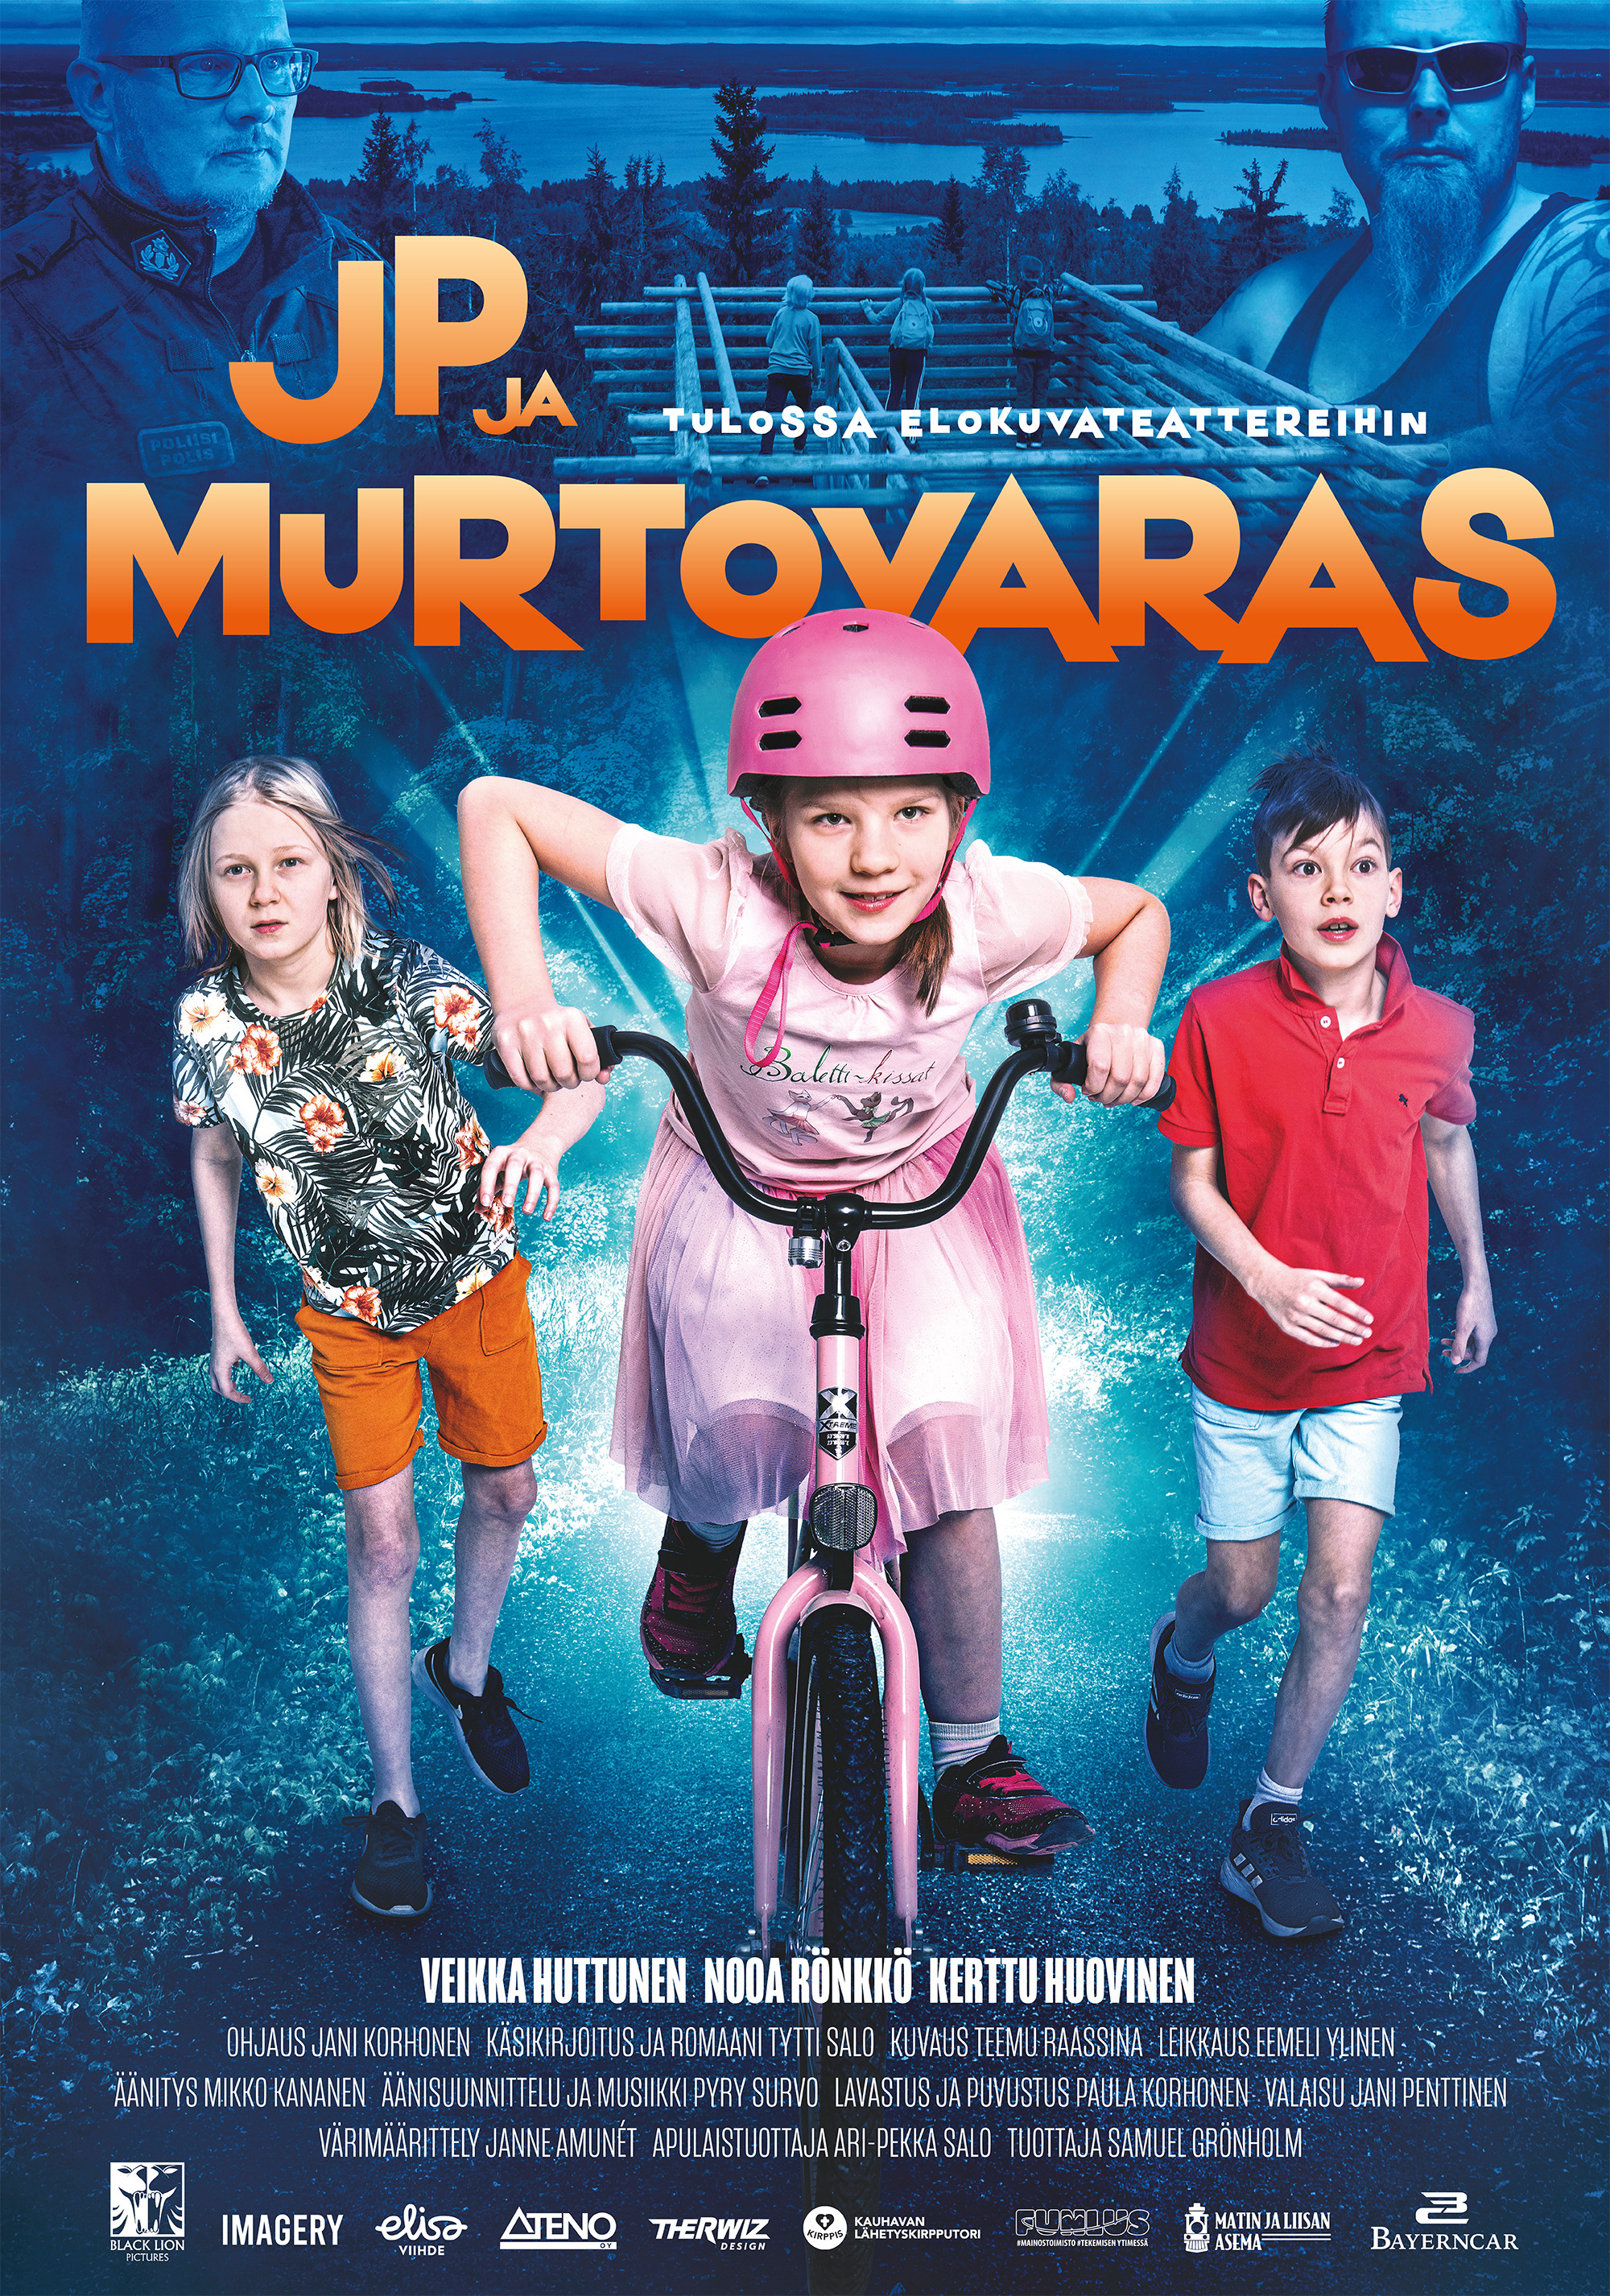 Mega Sized Movie Poster Image for JP ja murtovaras 